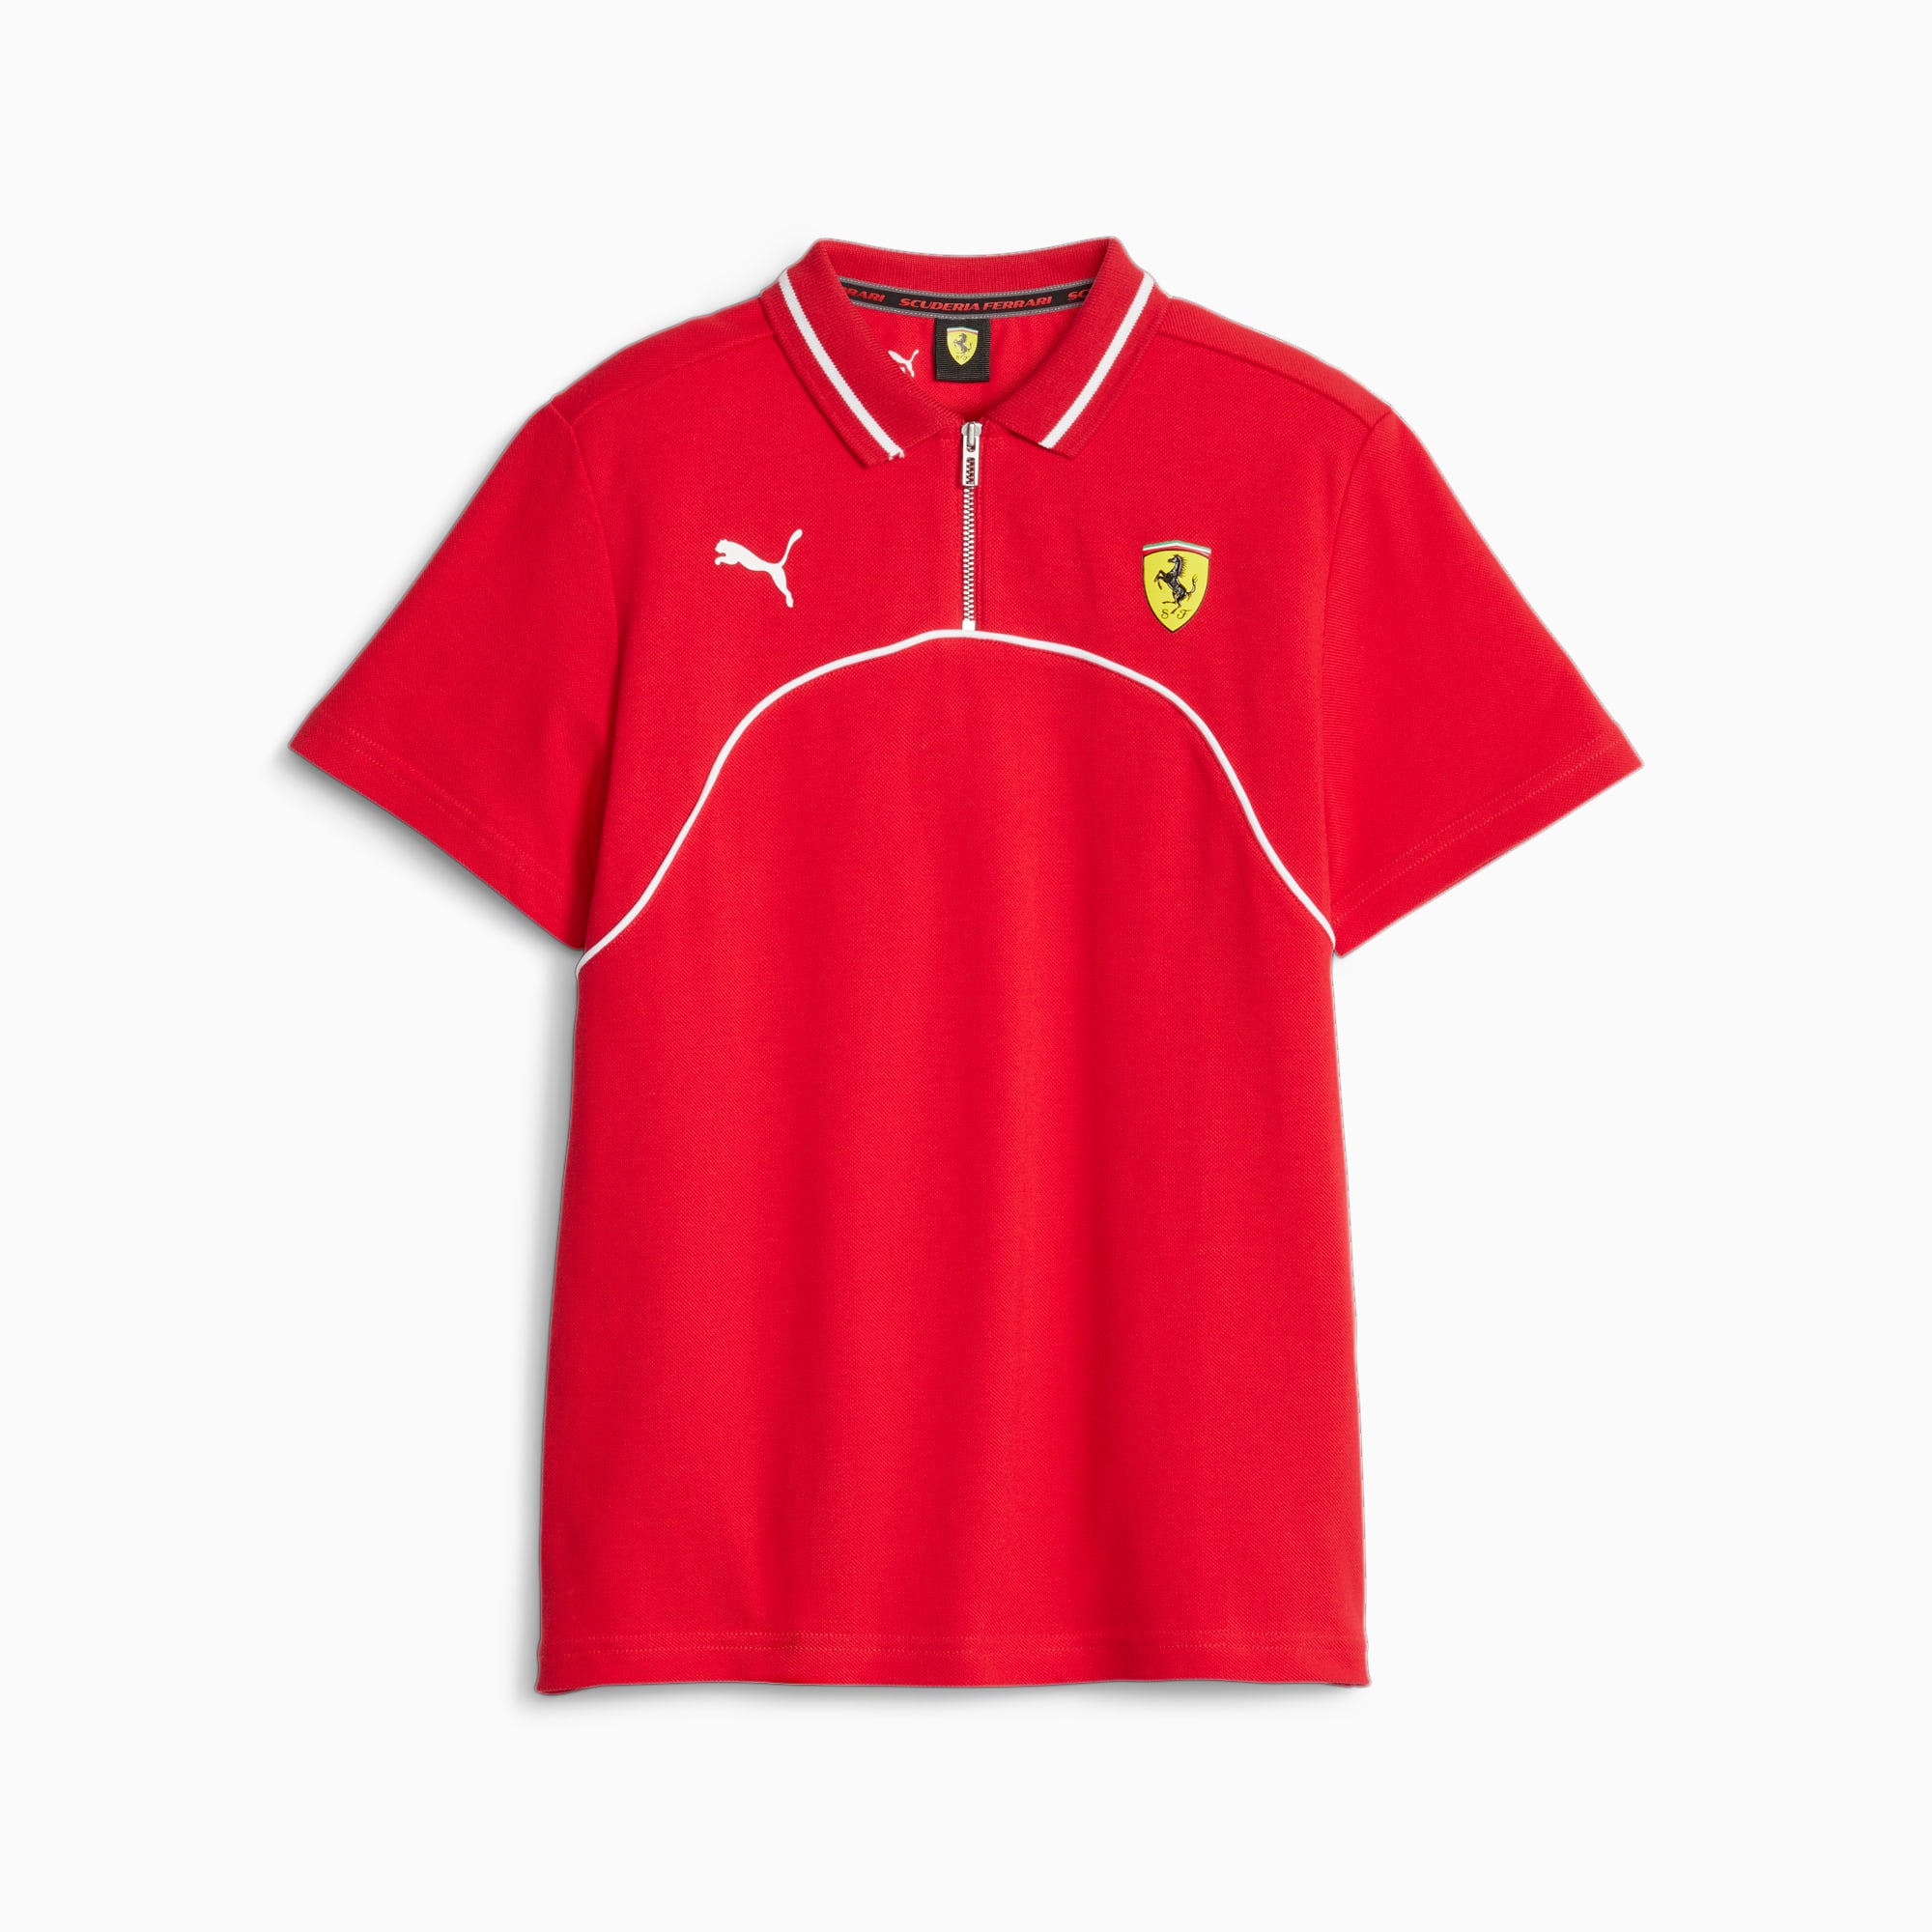 PUMA Scuderia Ferrari Poloshirt Teenager Für Kinder, Rot, Größe: 116, Kleidung